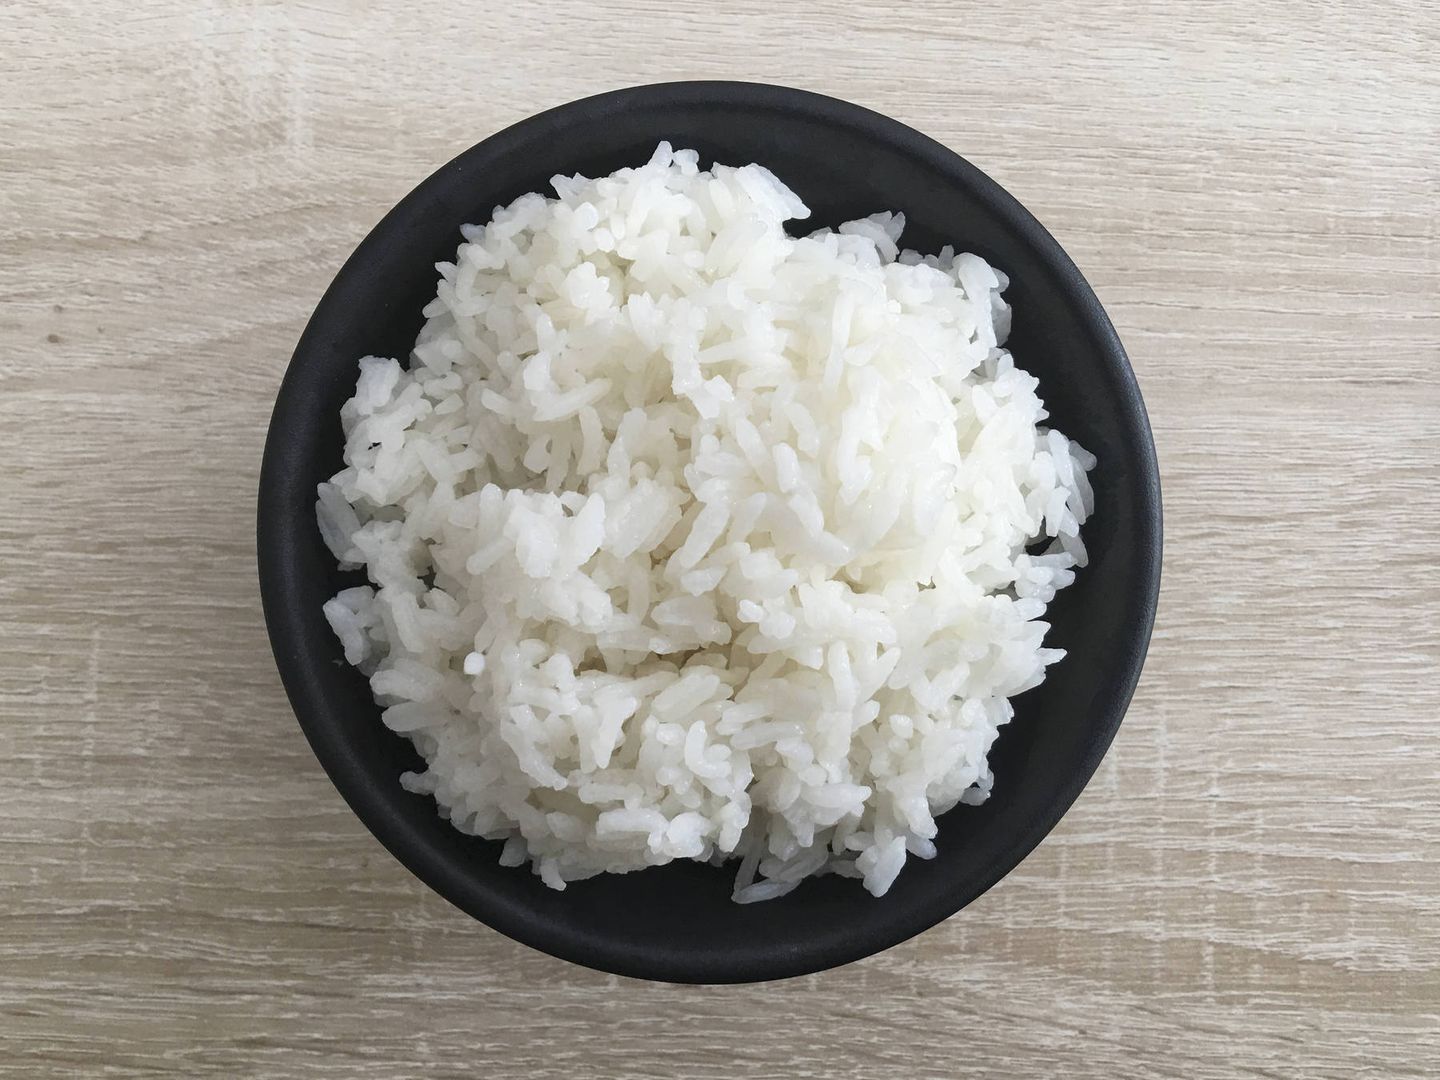 Rajkumar eliminó el arroz de su dieta